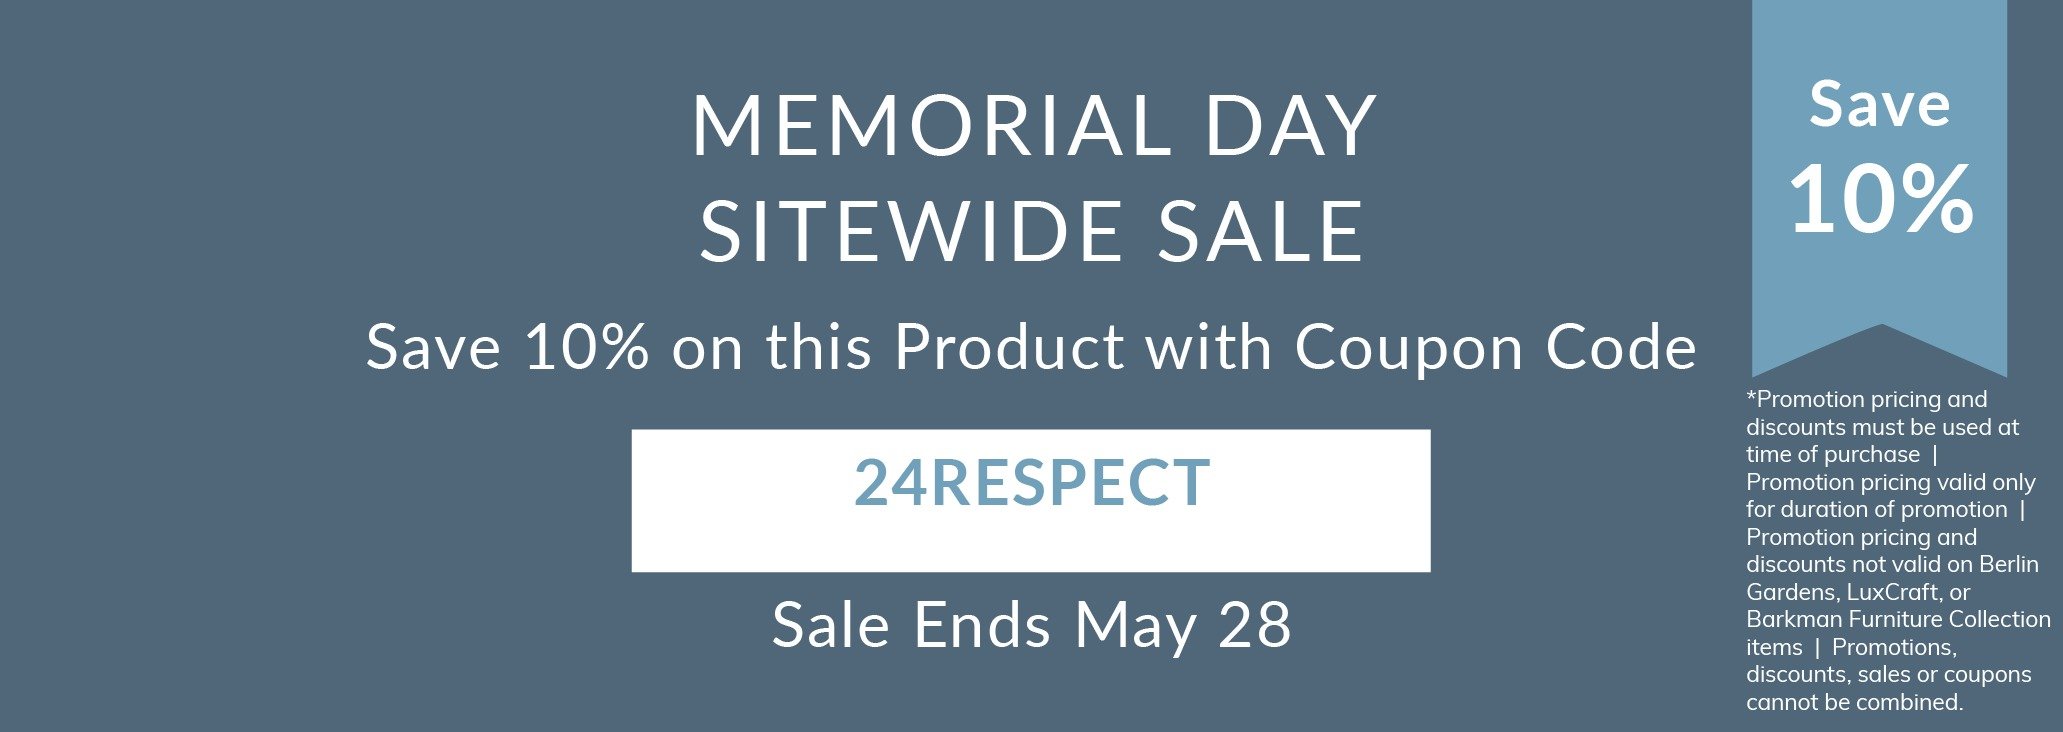 Memorial Sitewide Sale